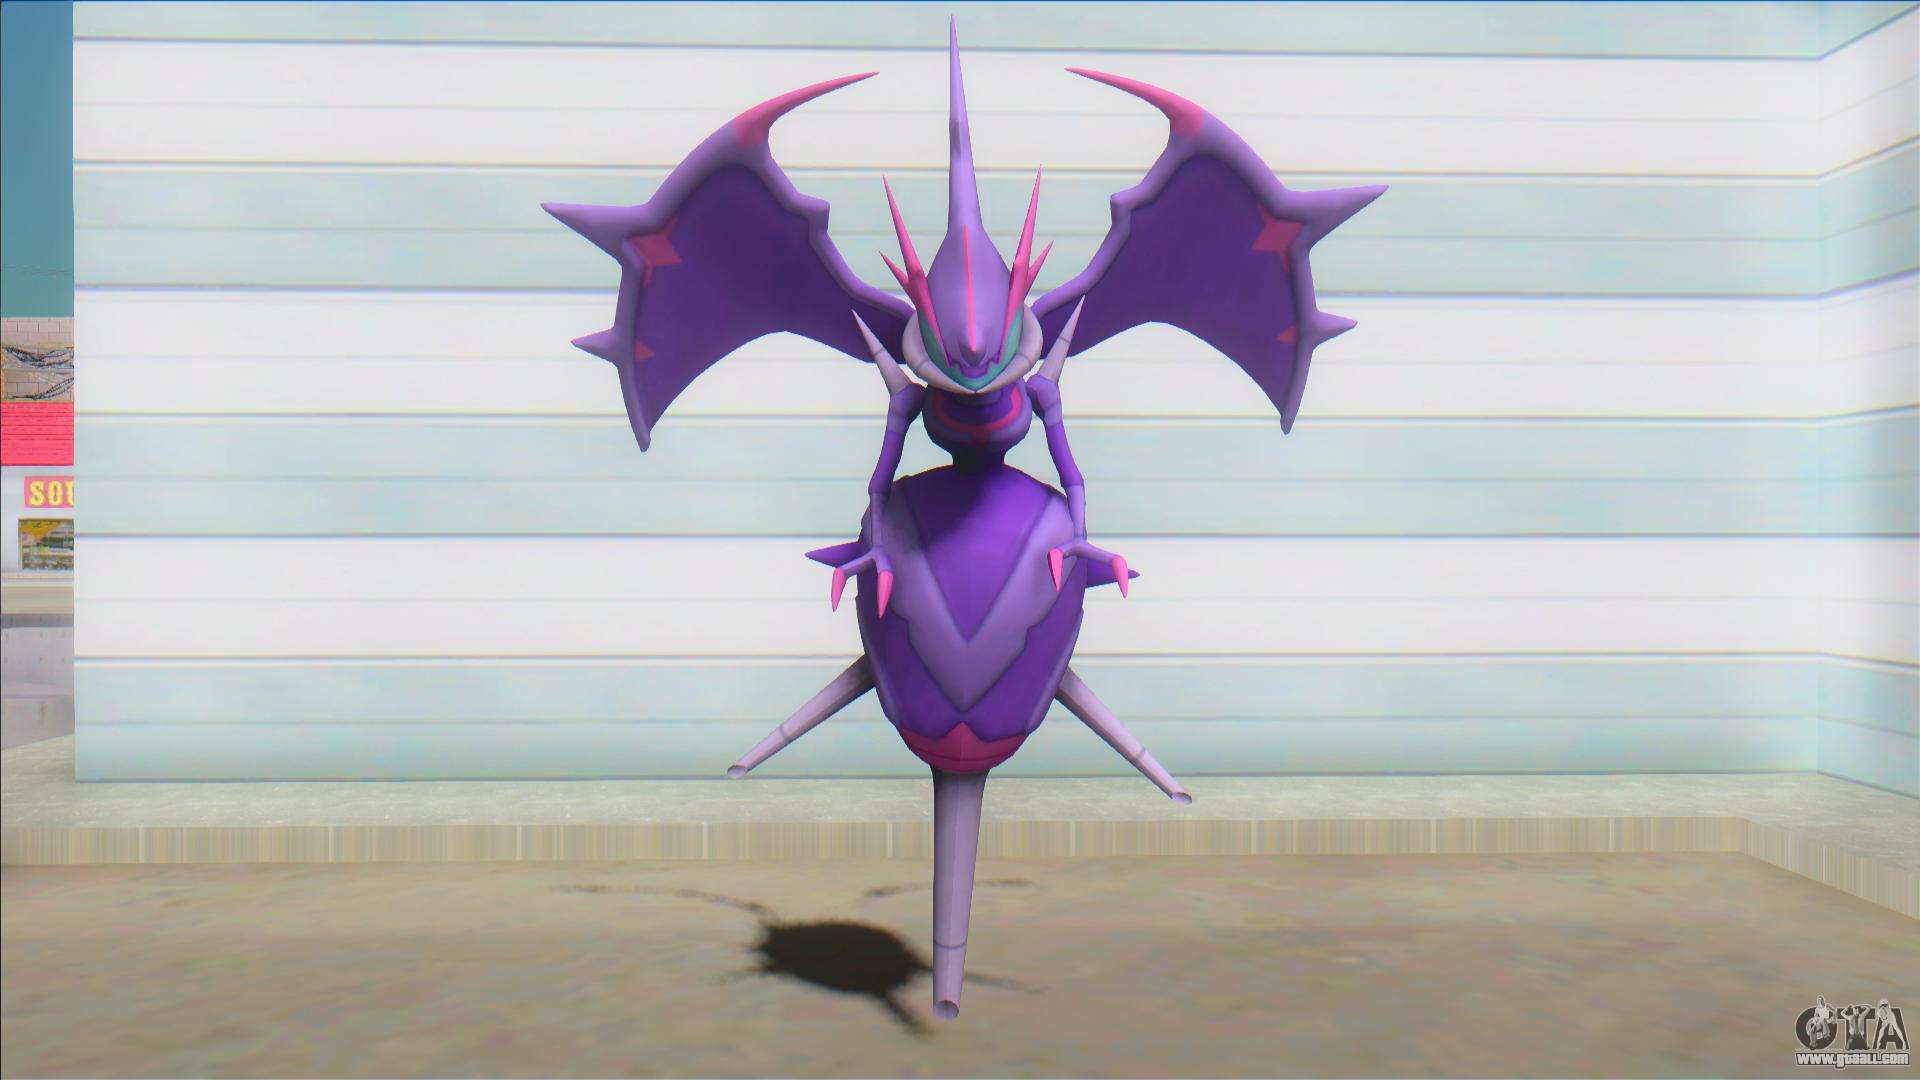 Shiny Gengar Recolor [Pokemon Scarlet & Violet] [Mods]